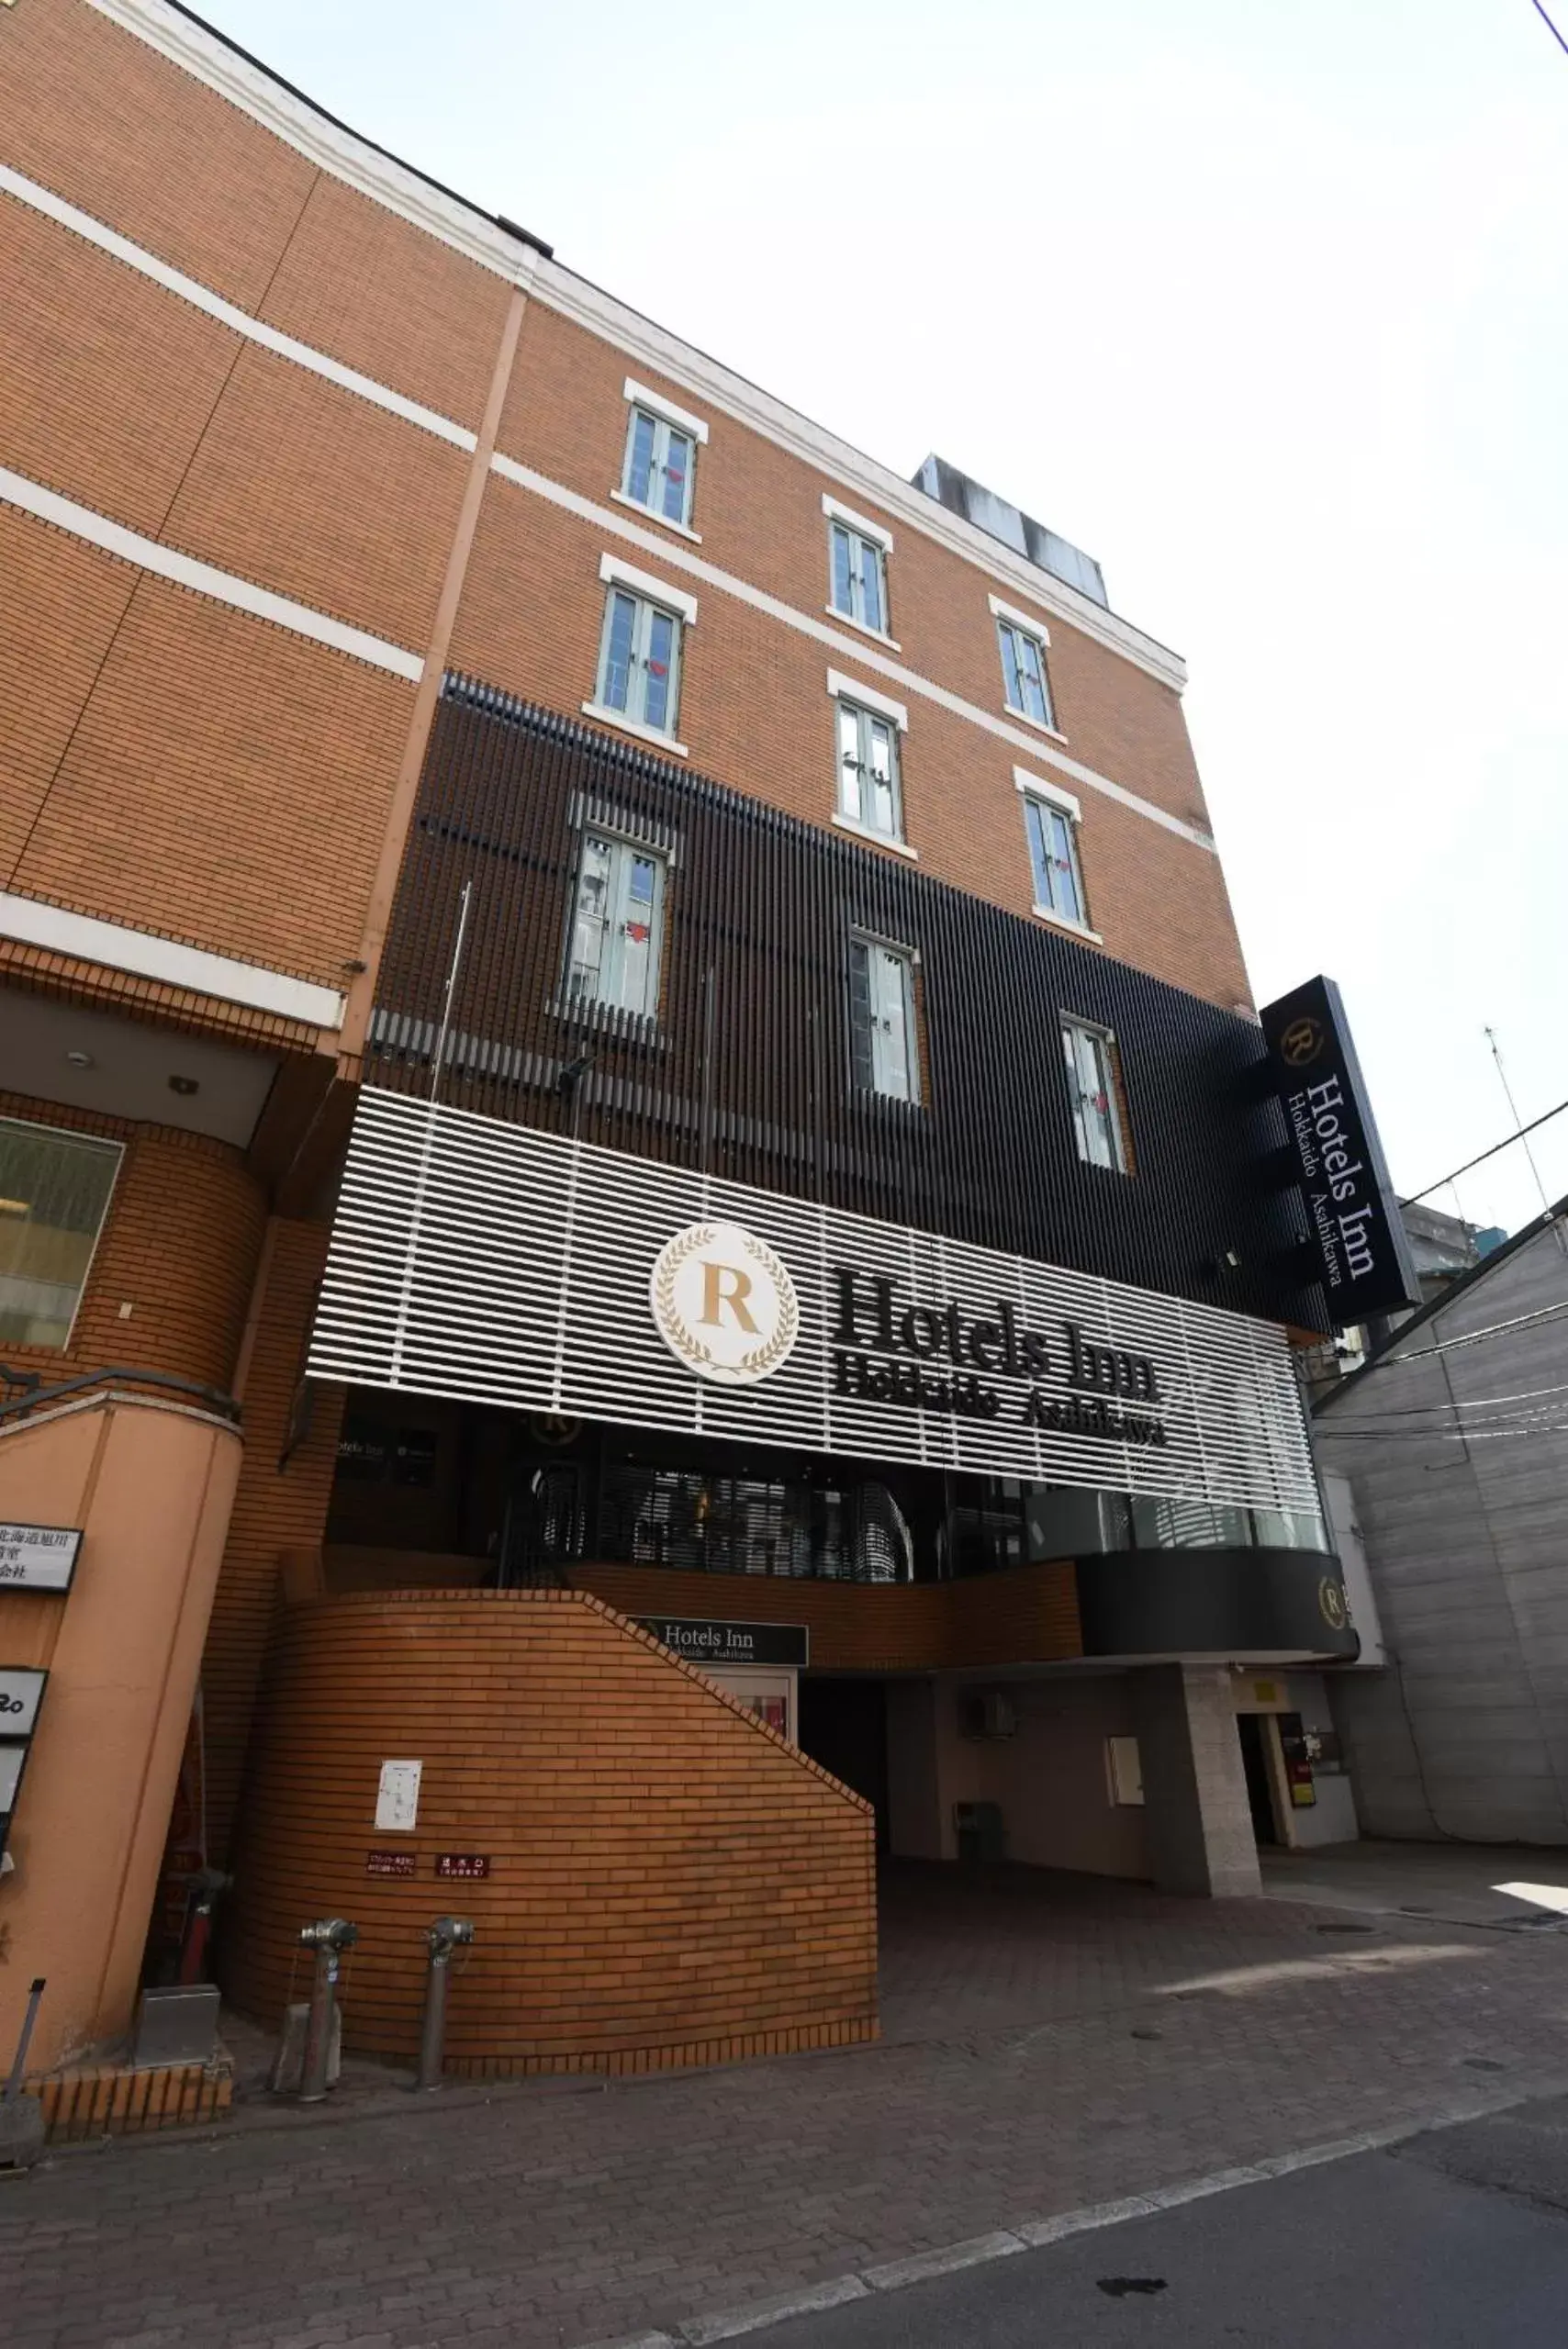 Facade/entrance, Property Building in R Hotels Inn Hokkaido Asahikawa